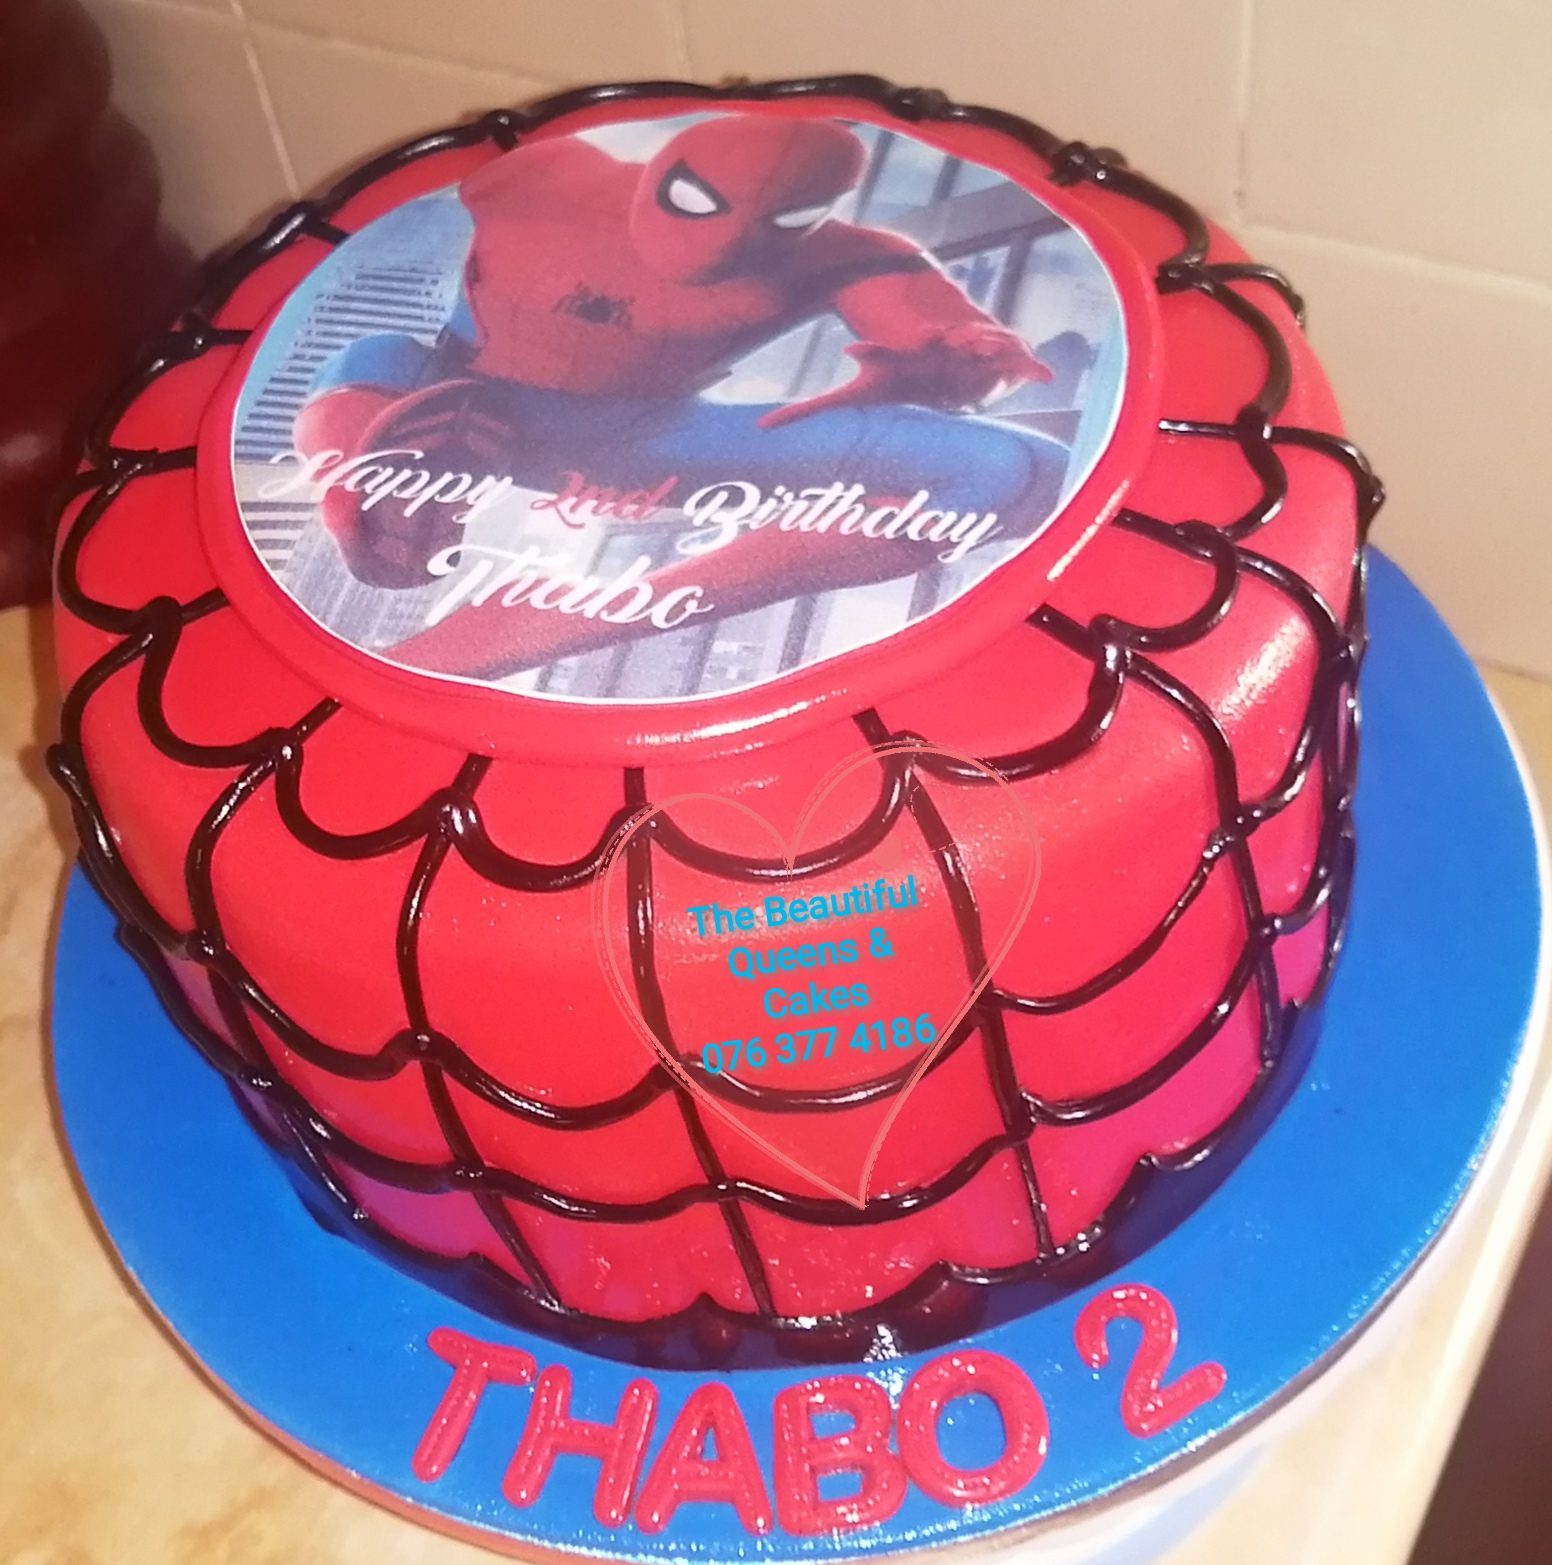 Spiderman themed birthday cake